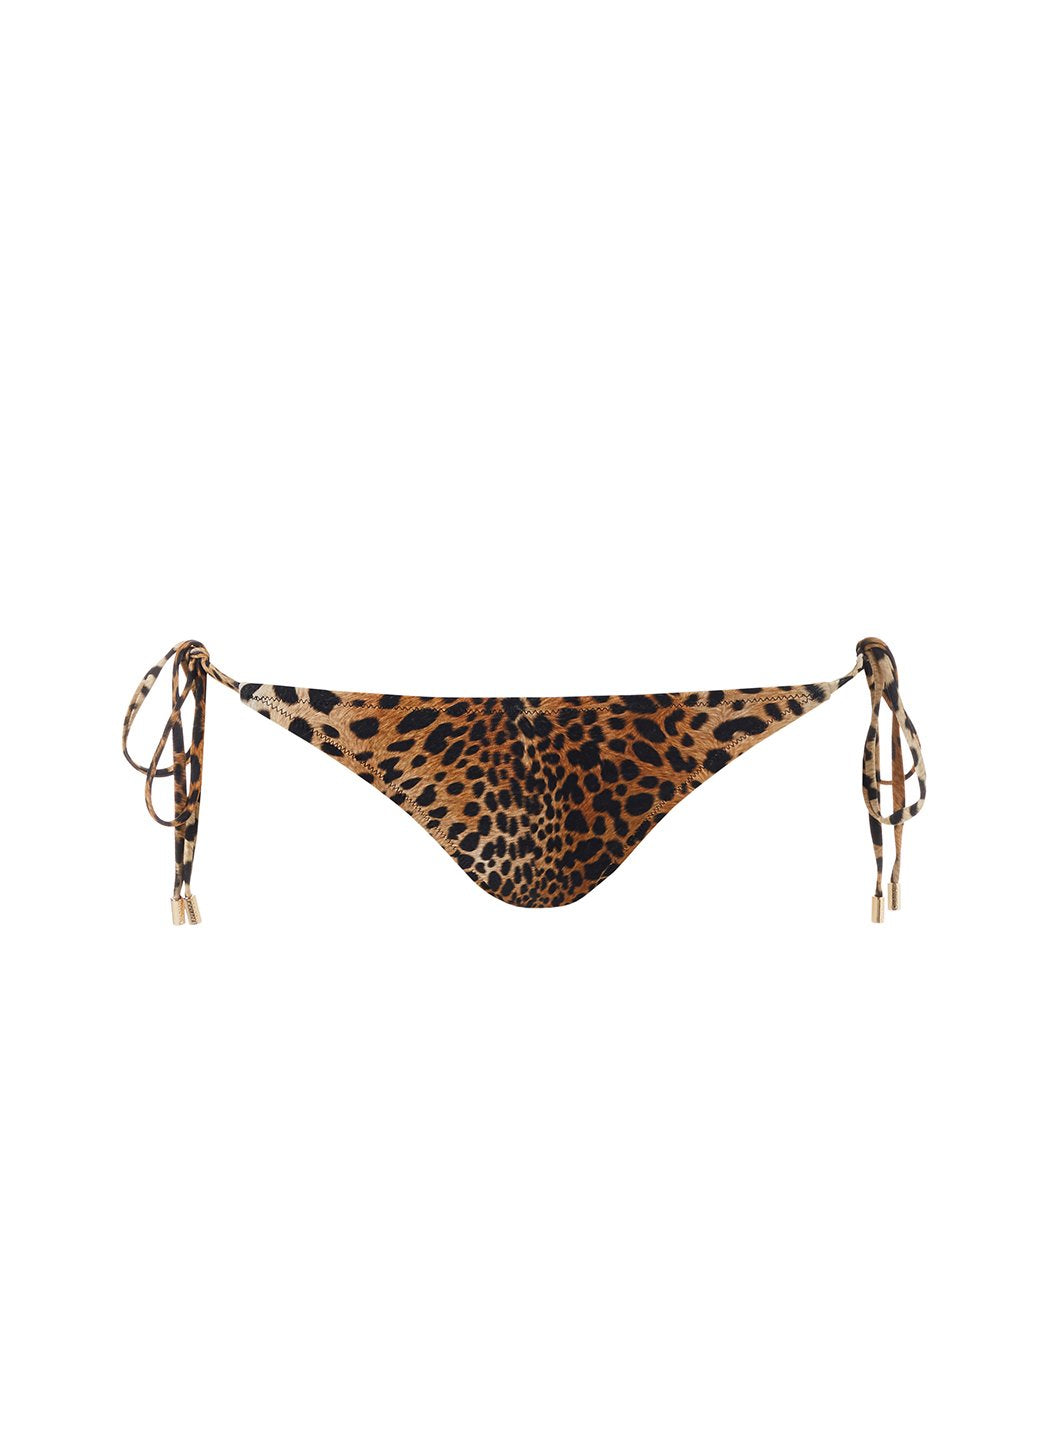 Miami Cheetah Print Bikini Bottom